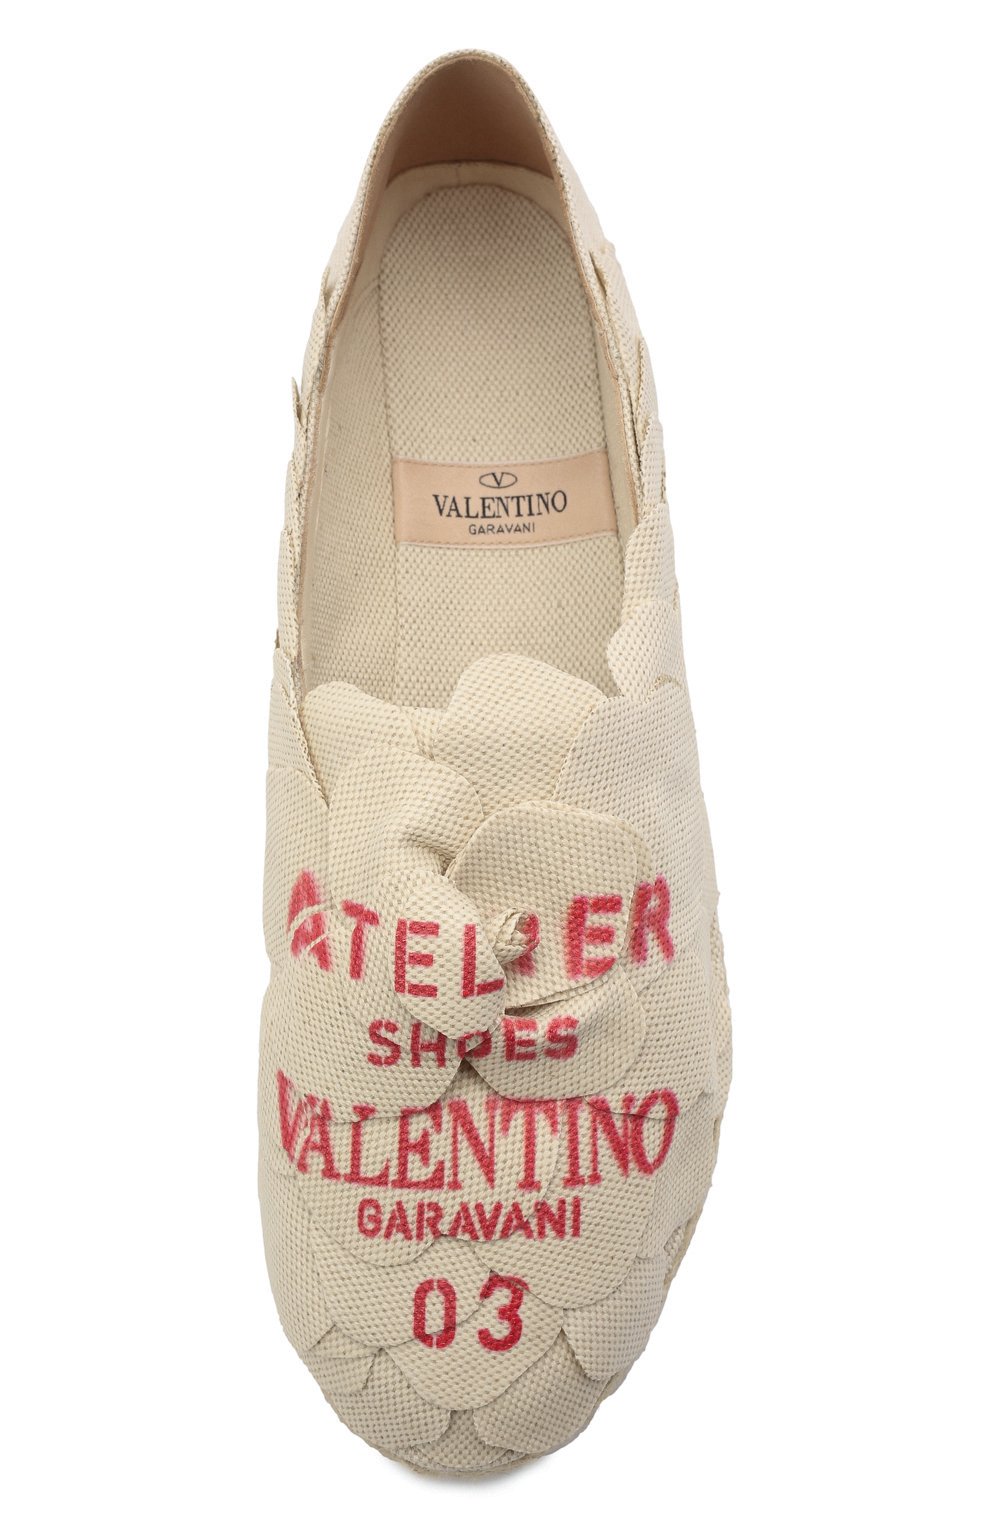 Текстильные эспадрильи Atelier 03 Rose Edition Valentino VW2S0BC0/IBB Фото 6